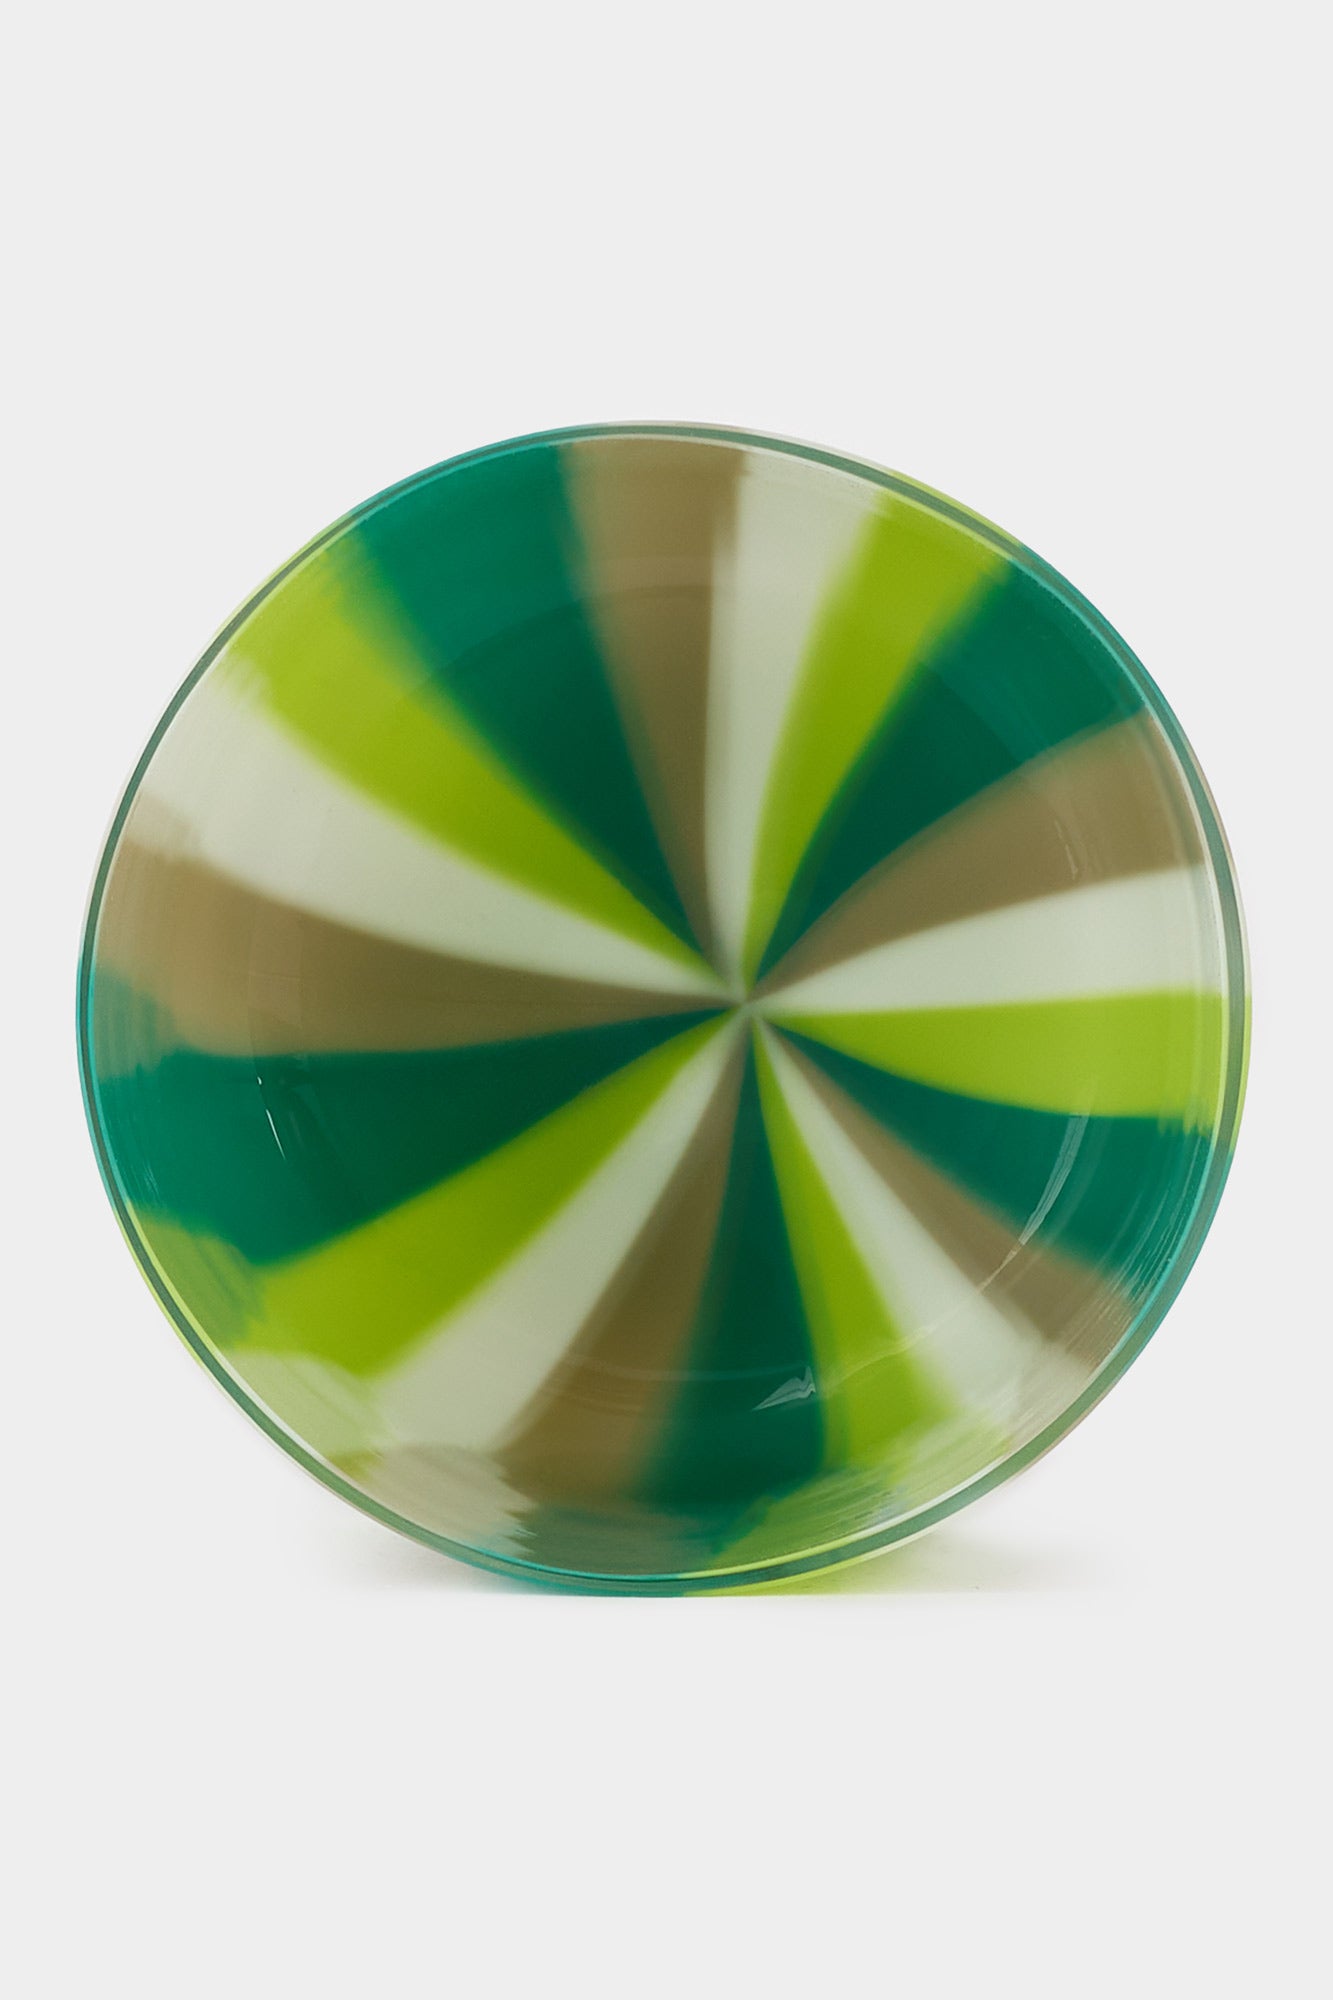 MURANO GLASS / light green & dark green